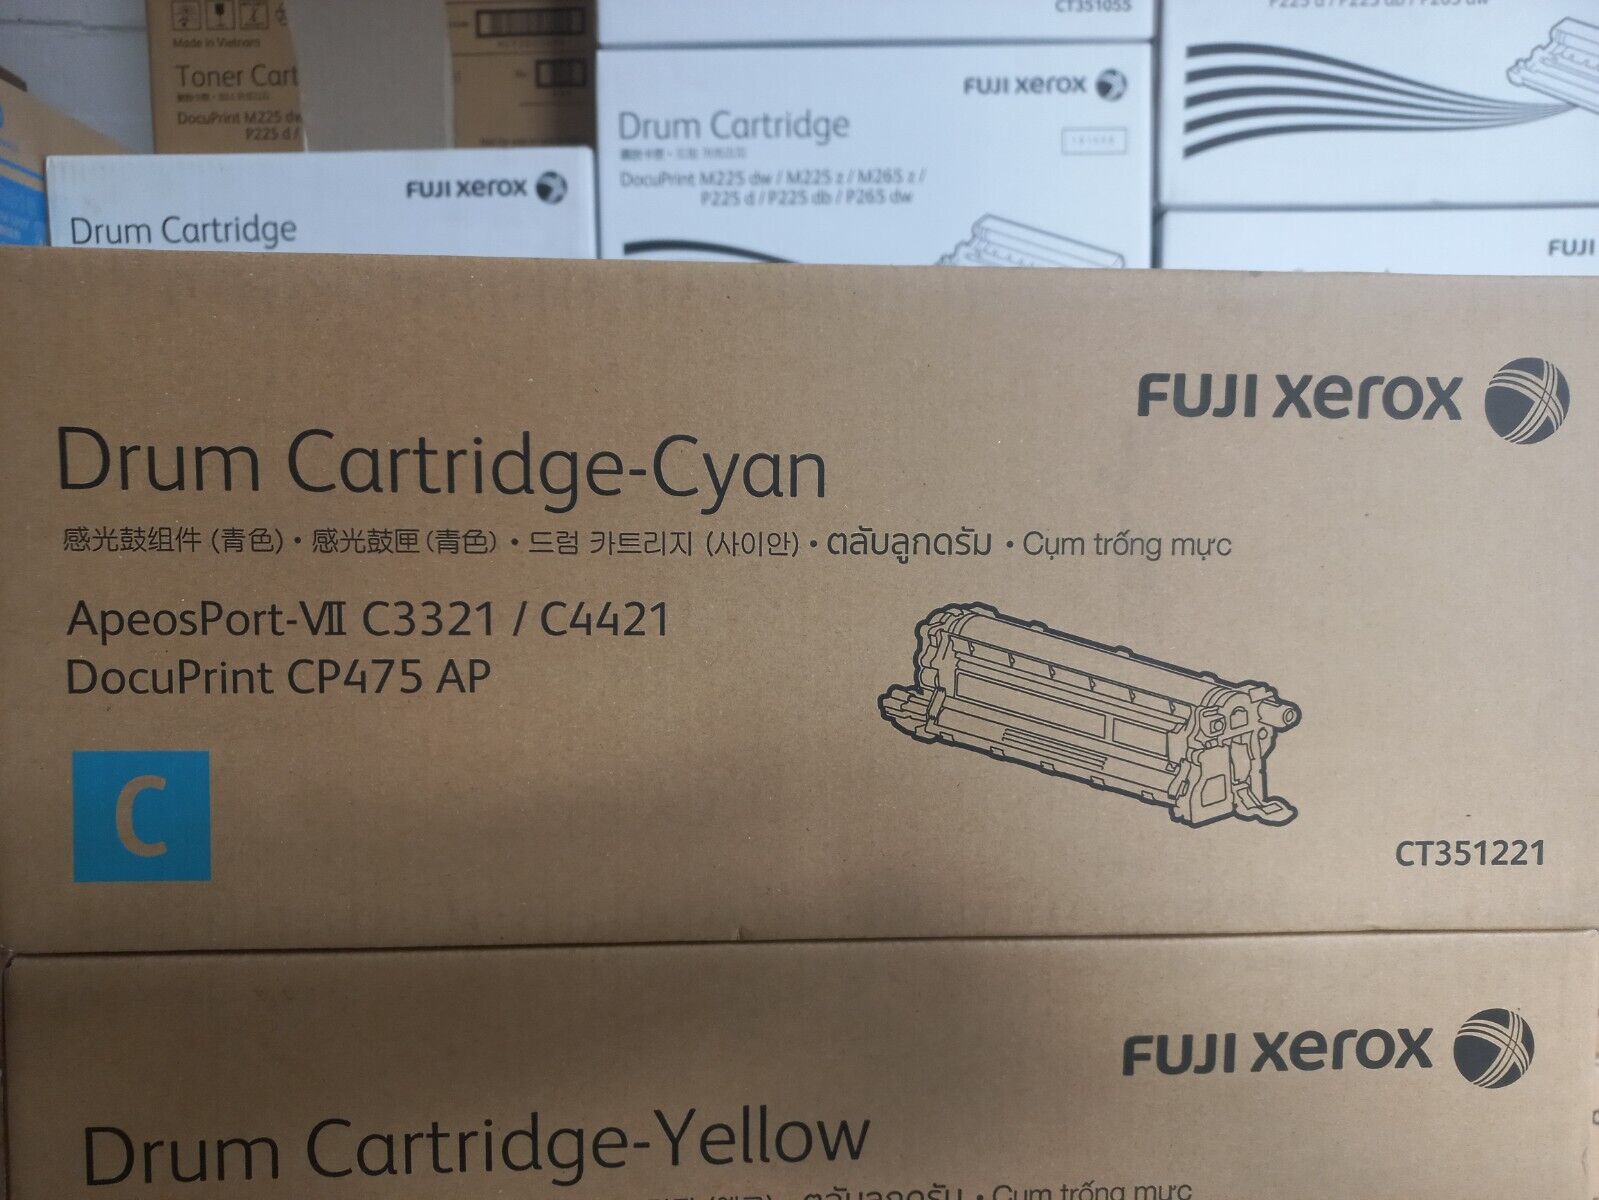 Genuine Fuji Xerox CT351221 ApeosPort VII C4421 C3321 CP475 CYAN DRUM CARTRIDGE